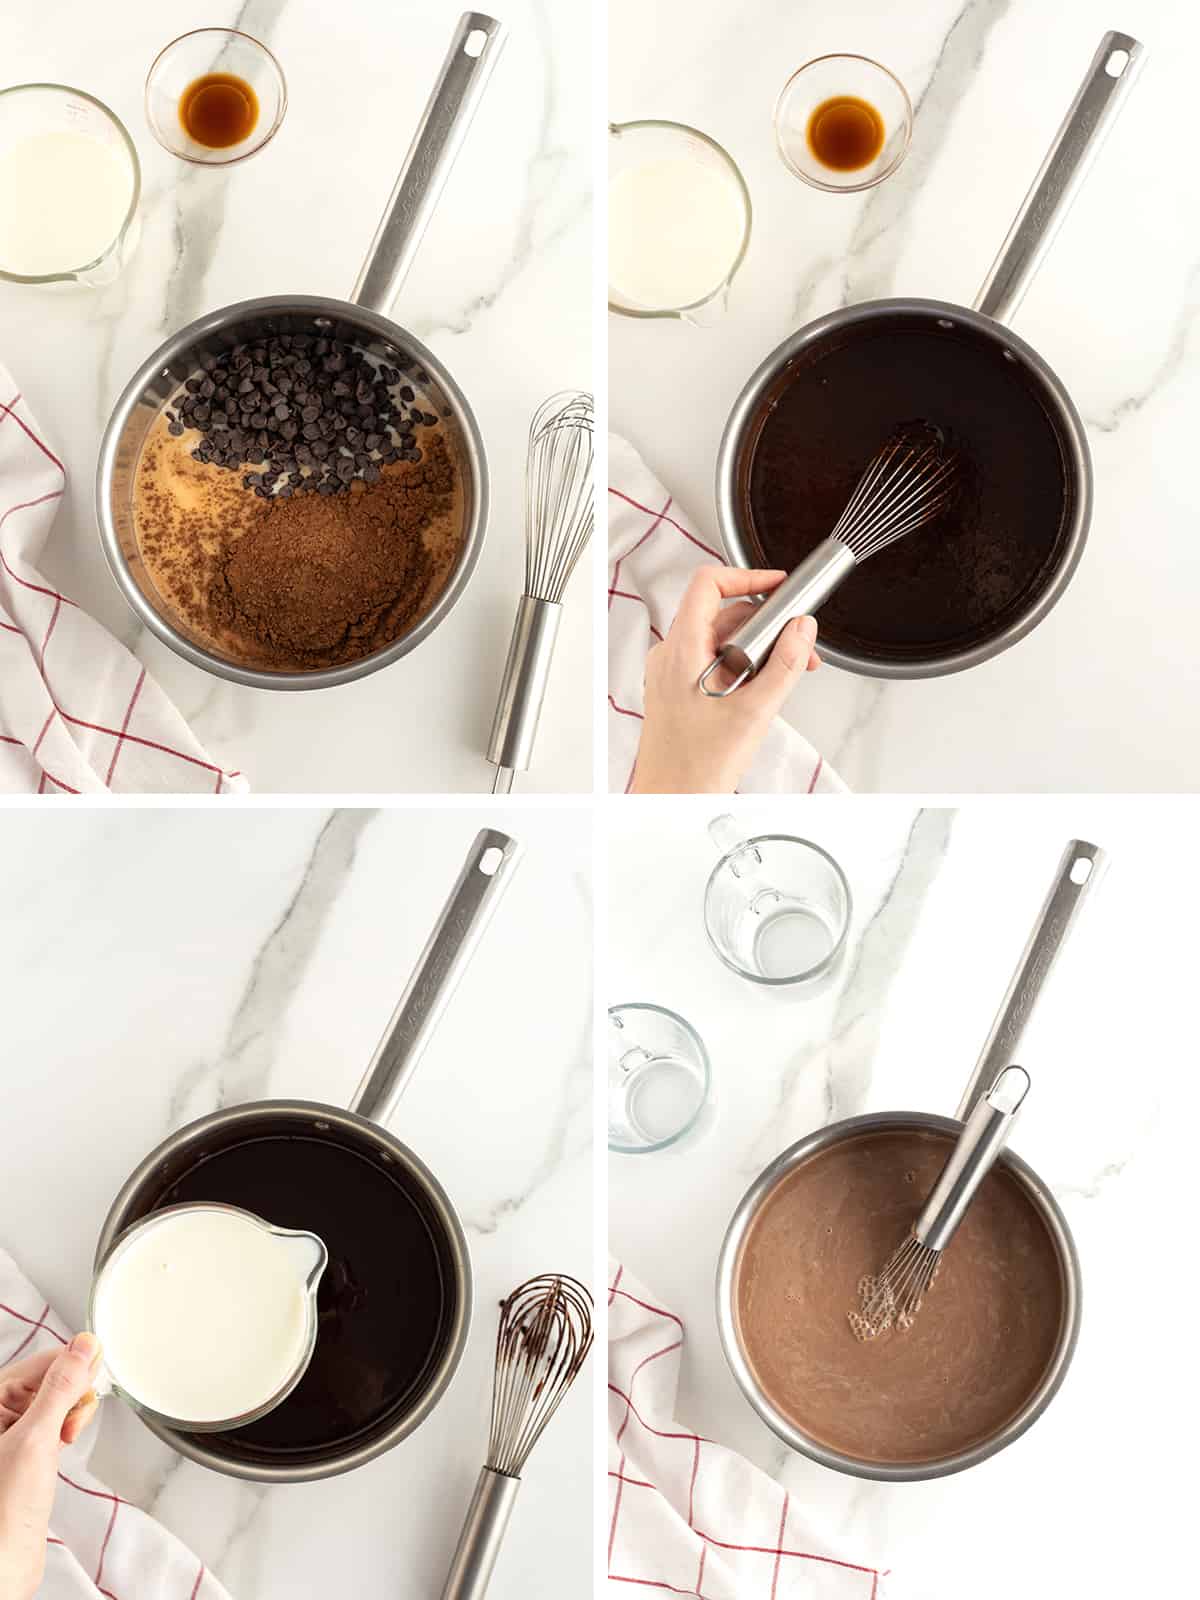 Homemade Hot Chocolate by The BakerMama